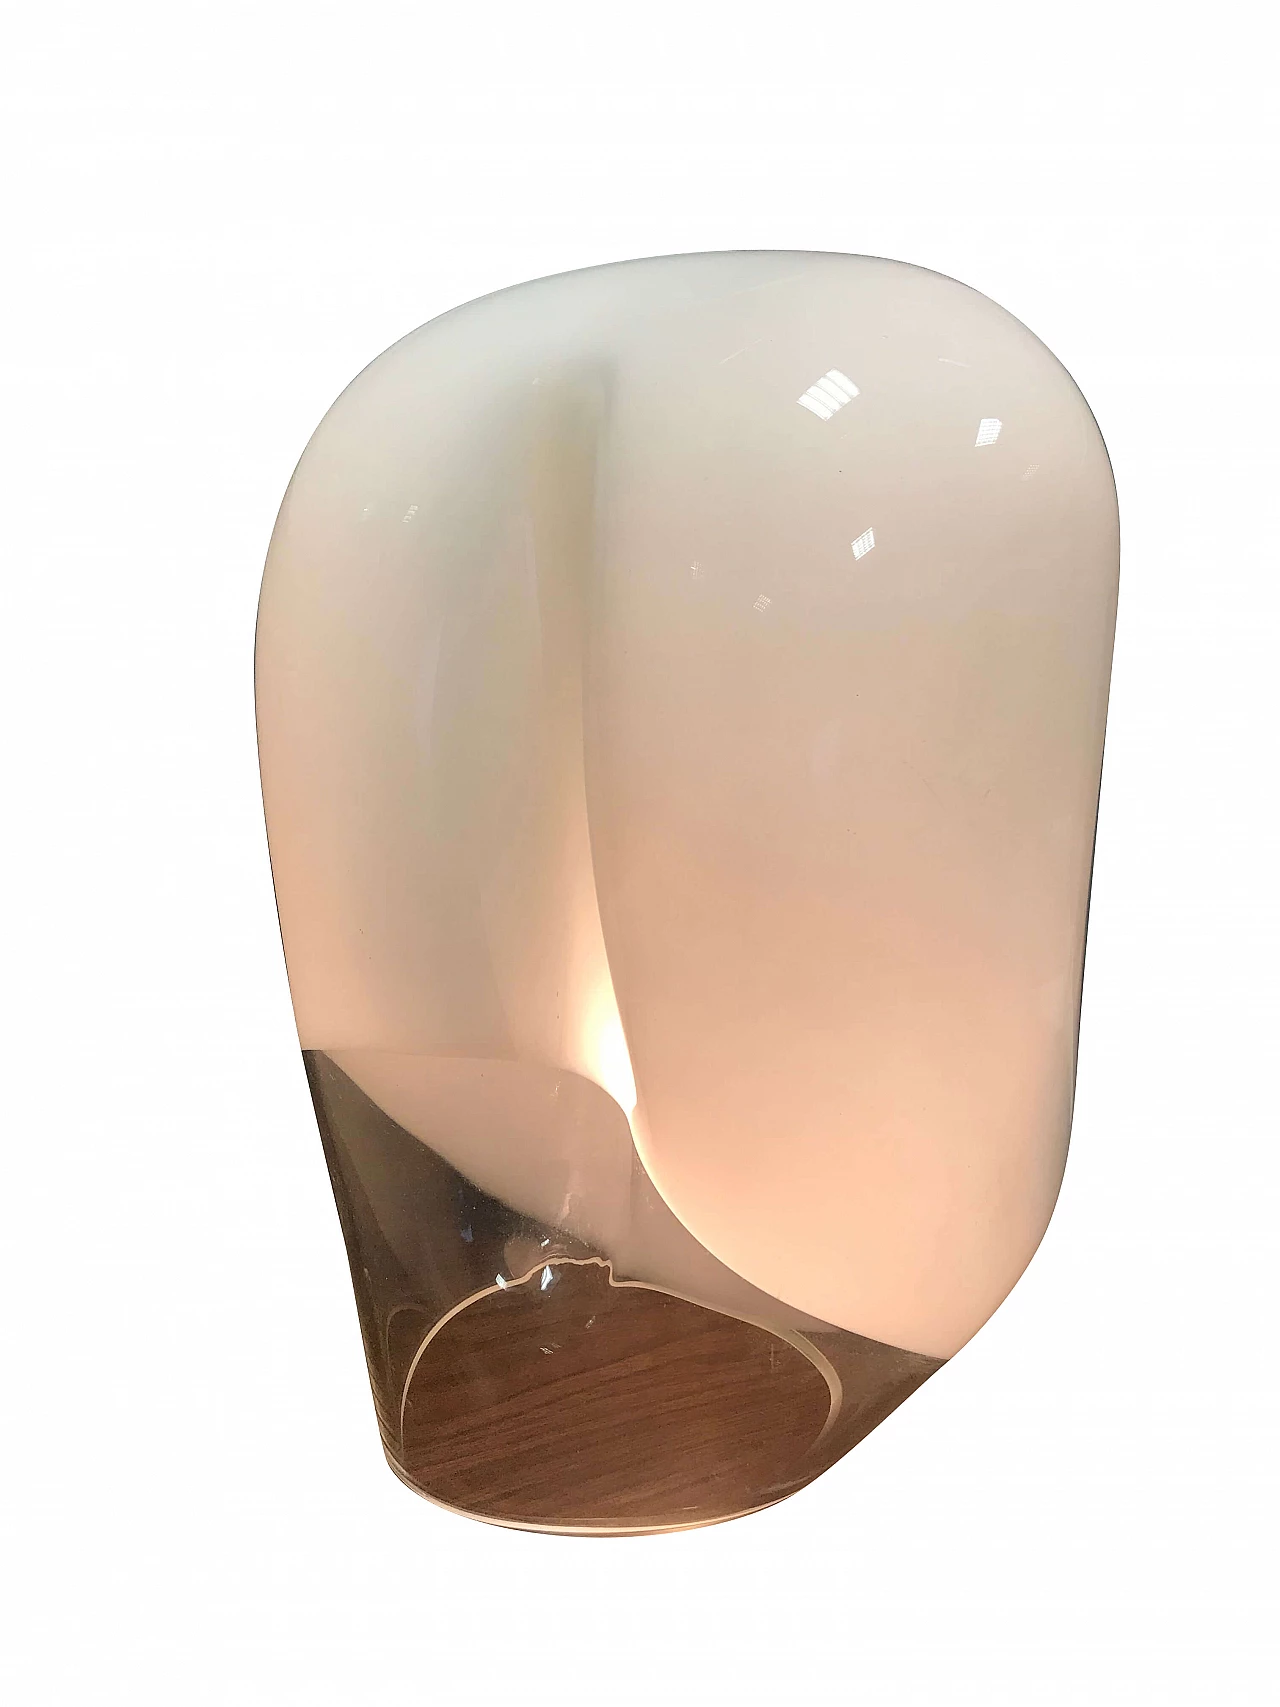 Murano glass table lamp with irregular white shape, Luciano Vistosi 1062959